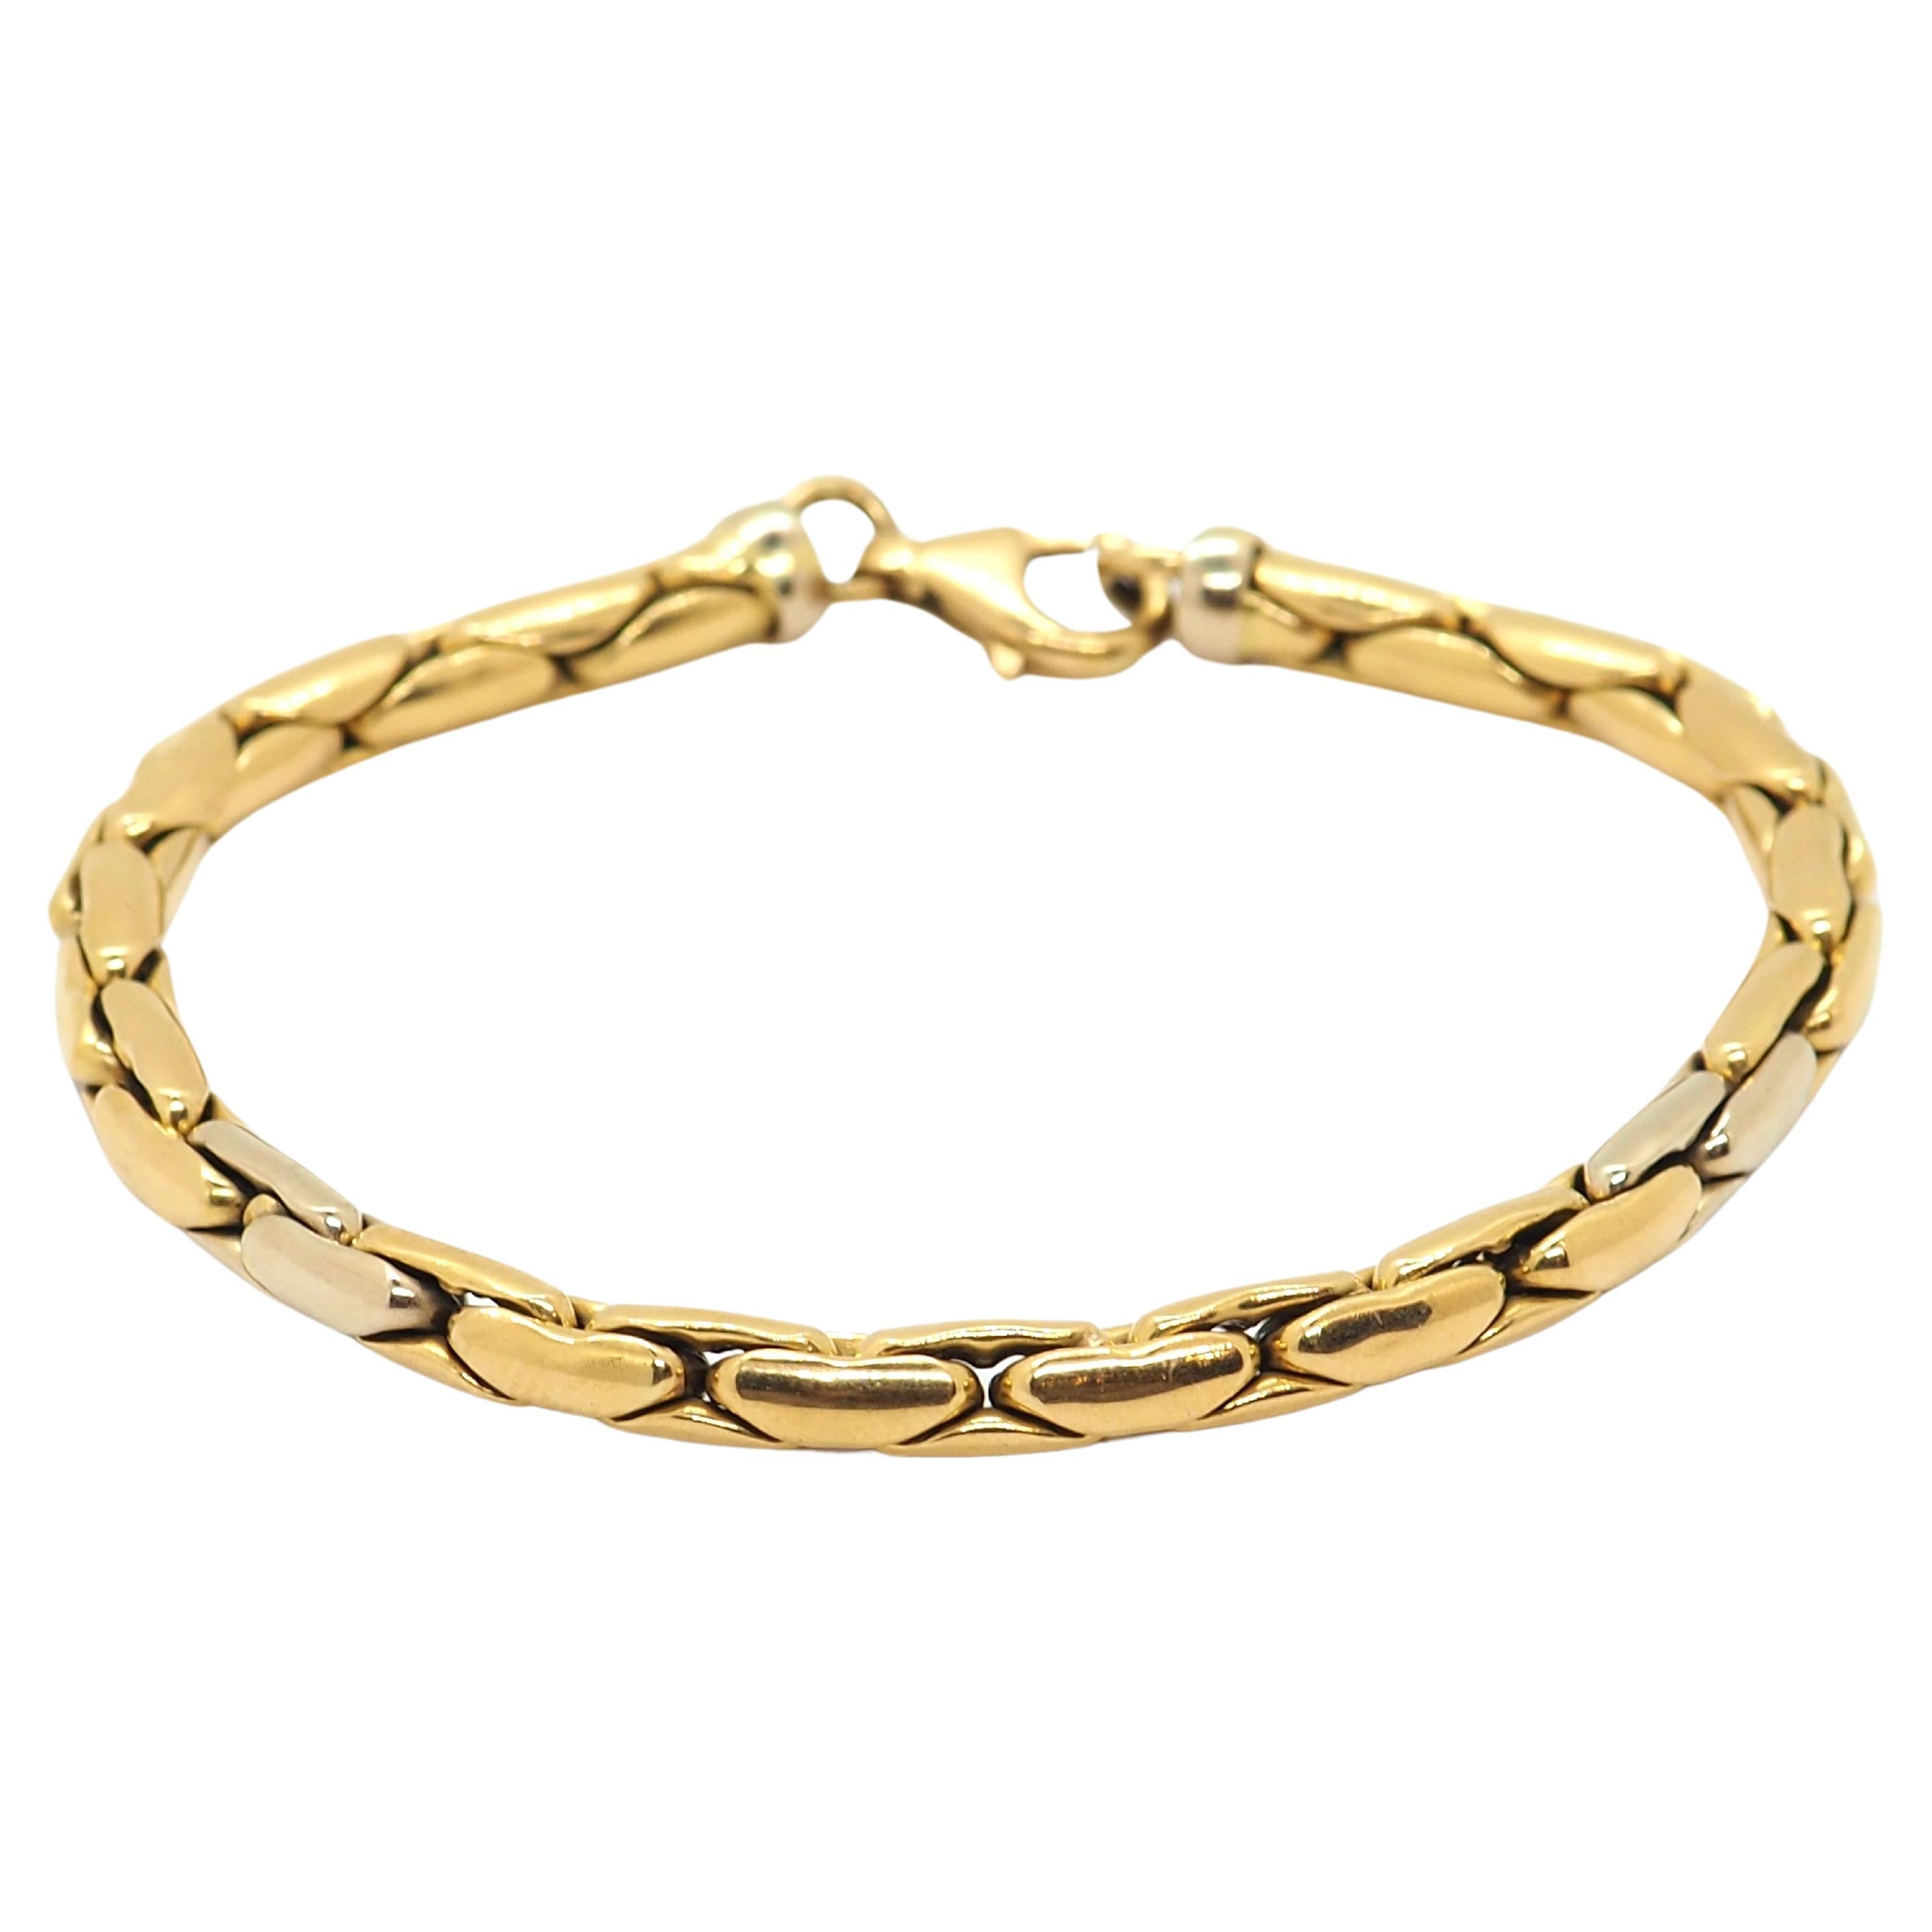 Chain Bracelet 18K Yellow Gold